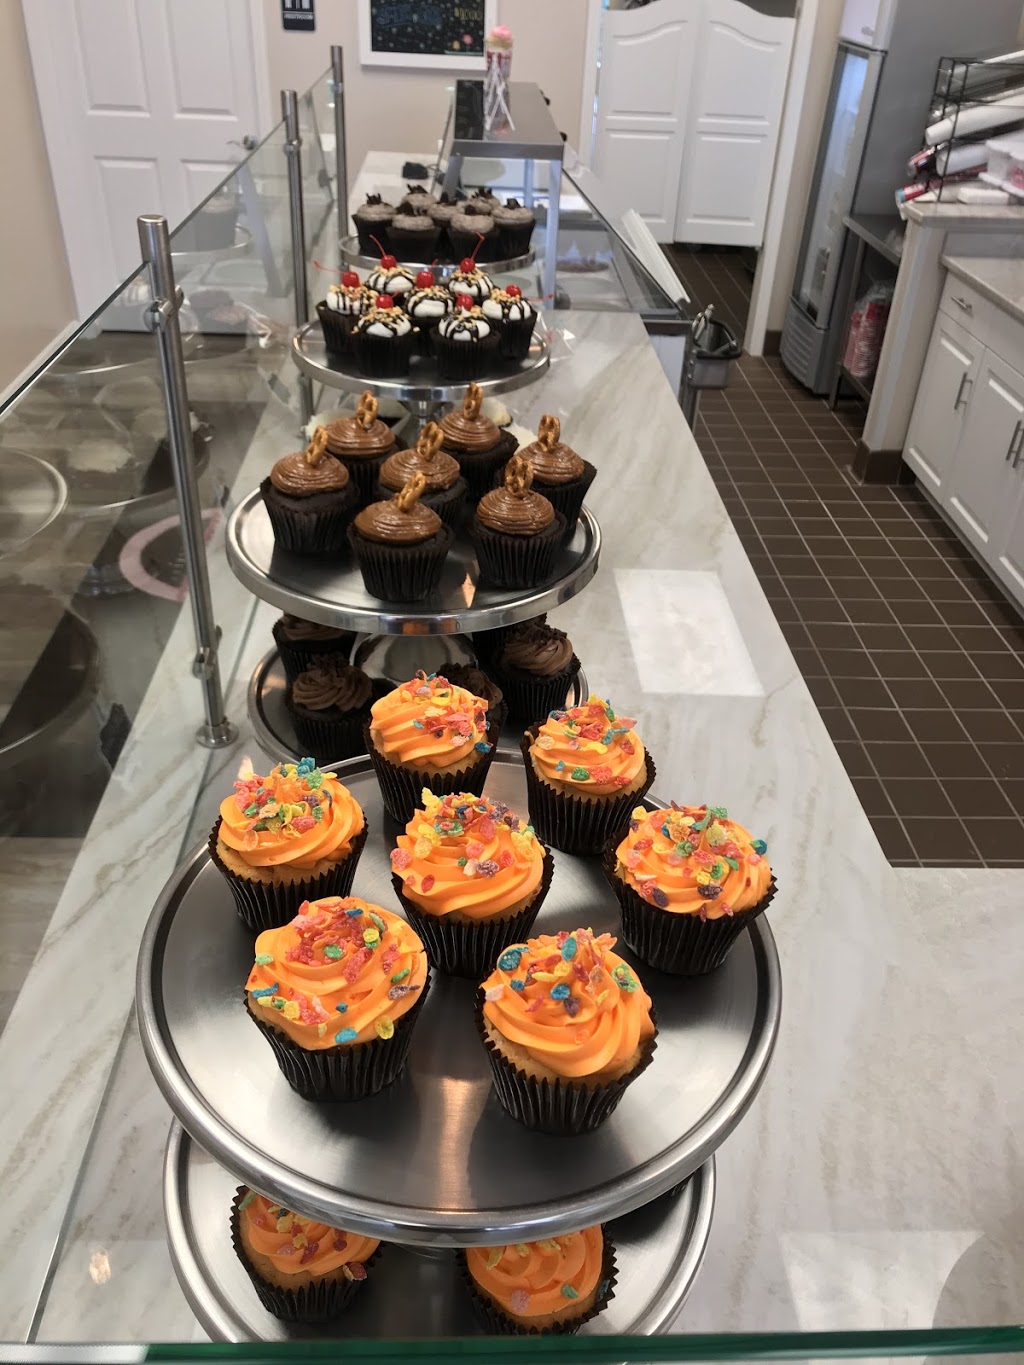 SmallCakes Cupcakery | 3251 Rolling Oaks Blvd, Kissimmee, FL 34747, USA | Phone: (407) 507-6619